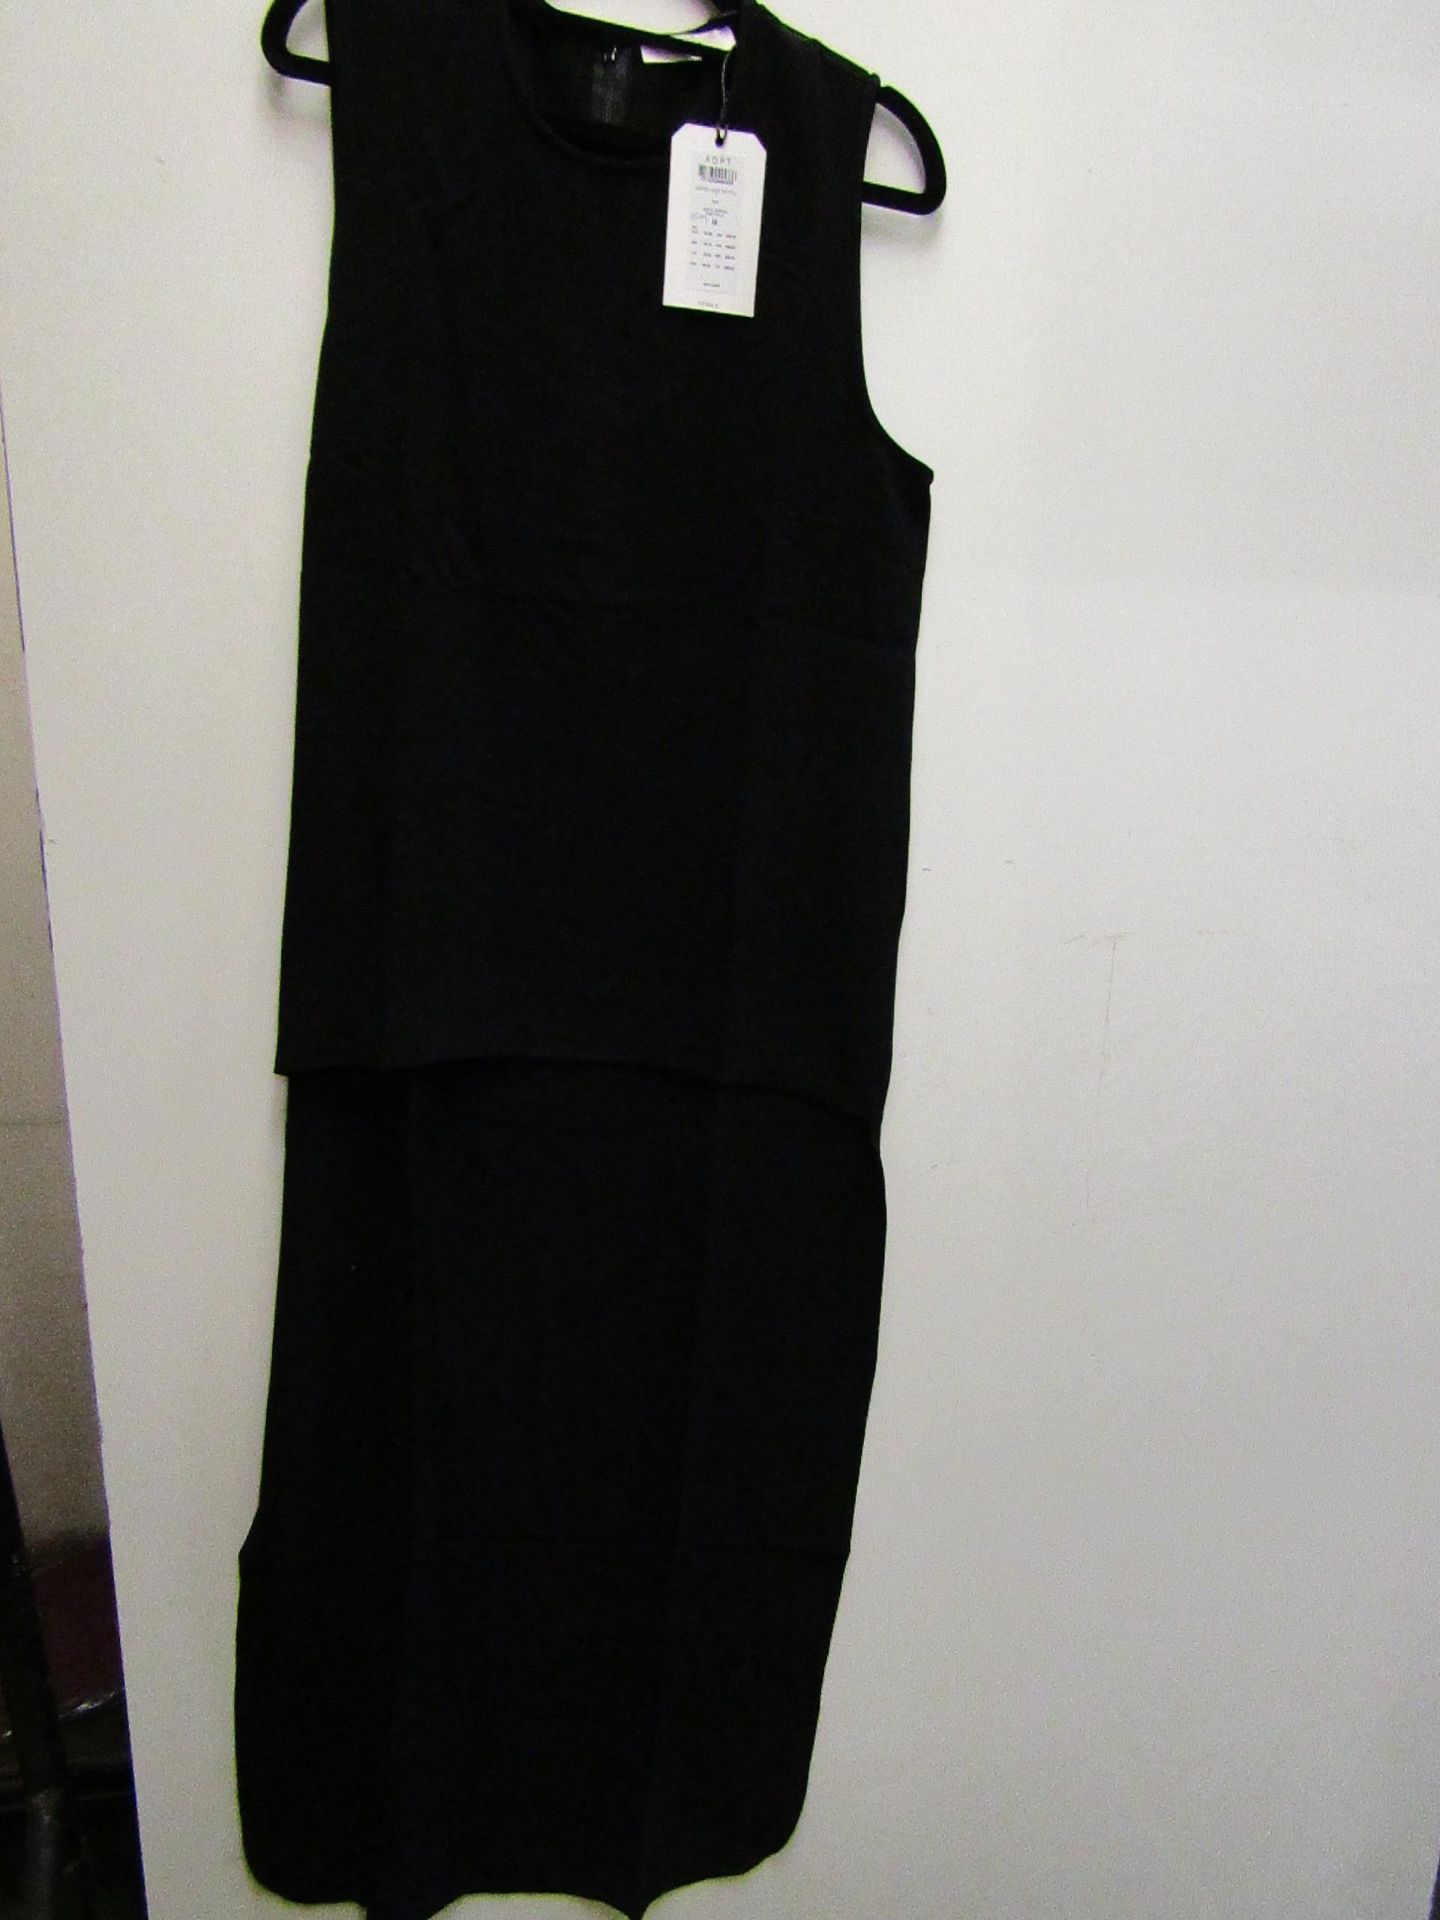 ADPT Ladies Long Black Dress Size S New in Packaging